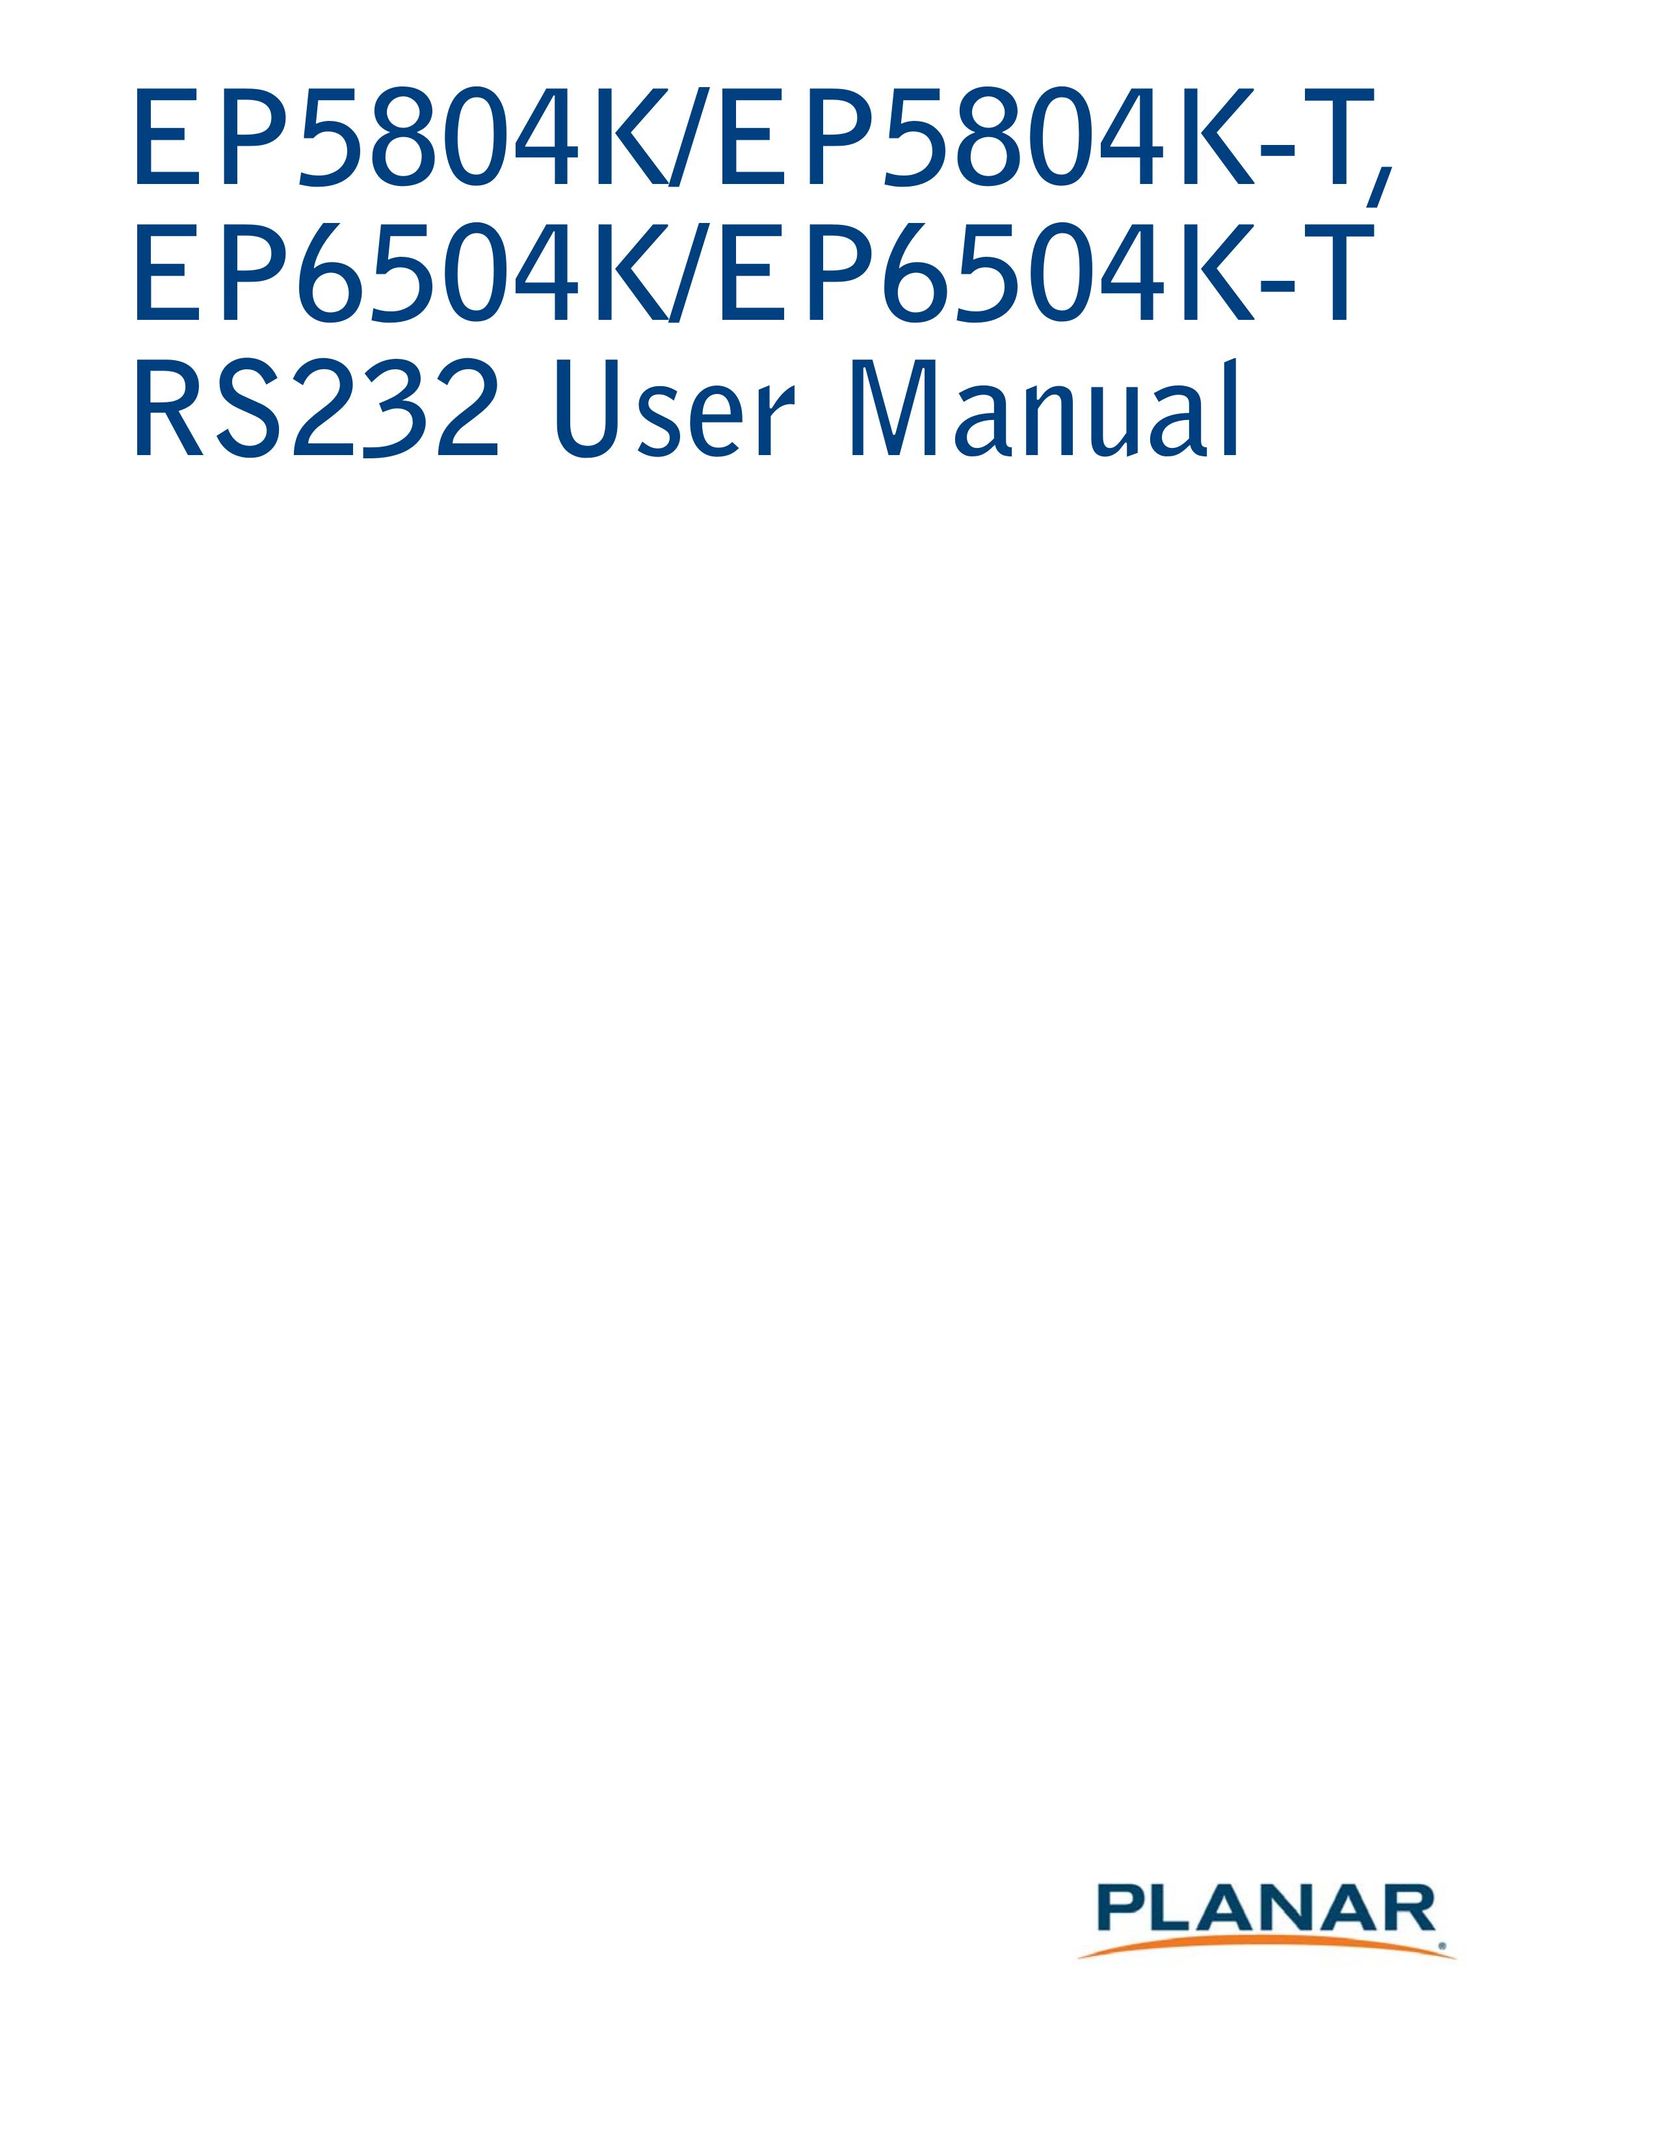 Planar EP5804K/EP5804K-T Car Video System User Manual